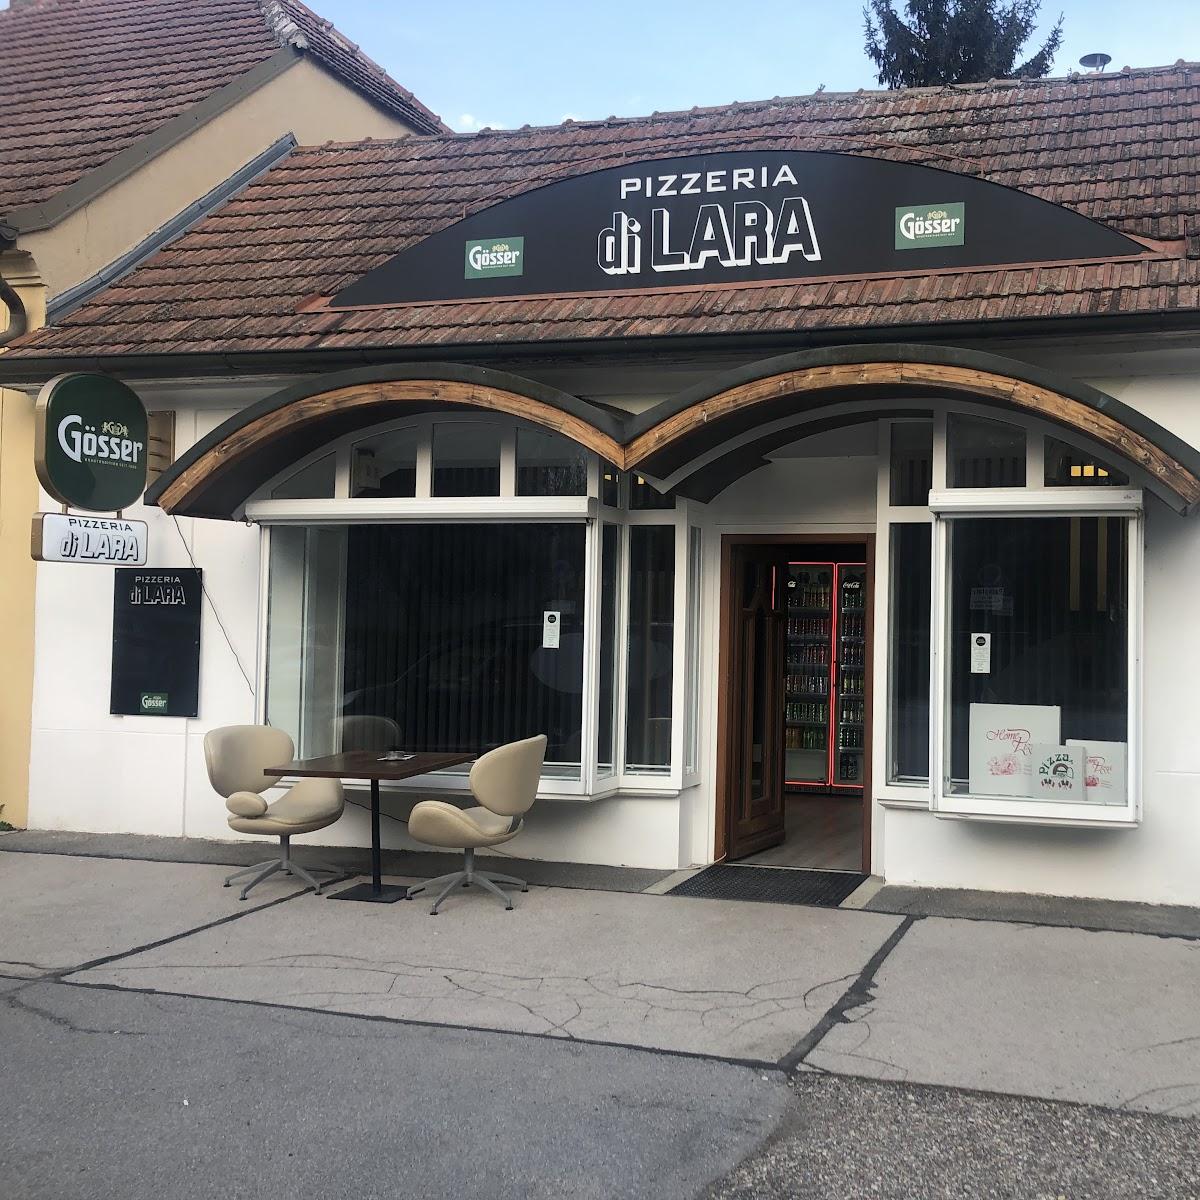 Restaurant "Pizzeria di Lara" in Mistelbach